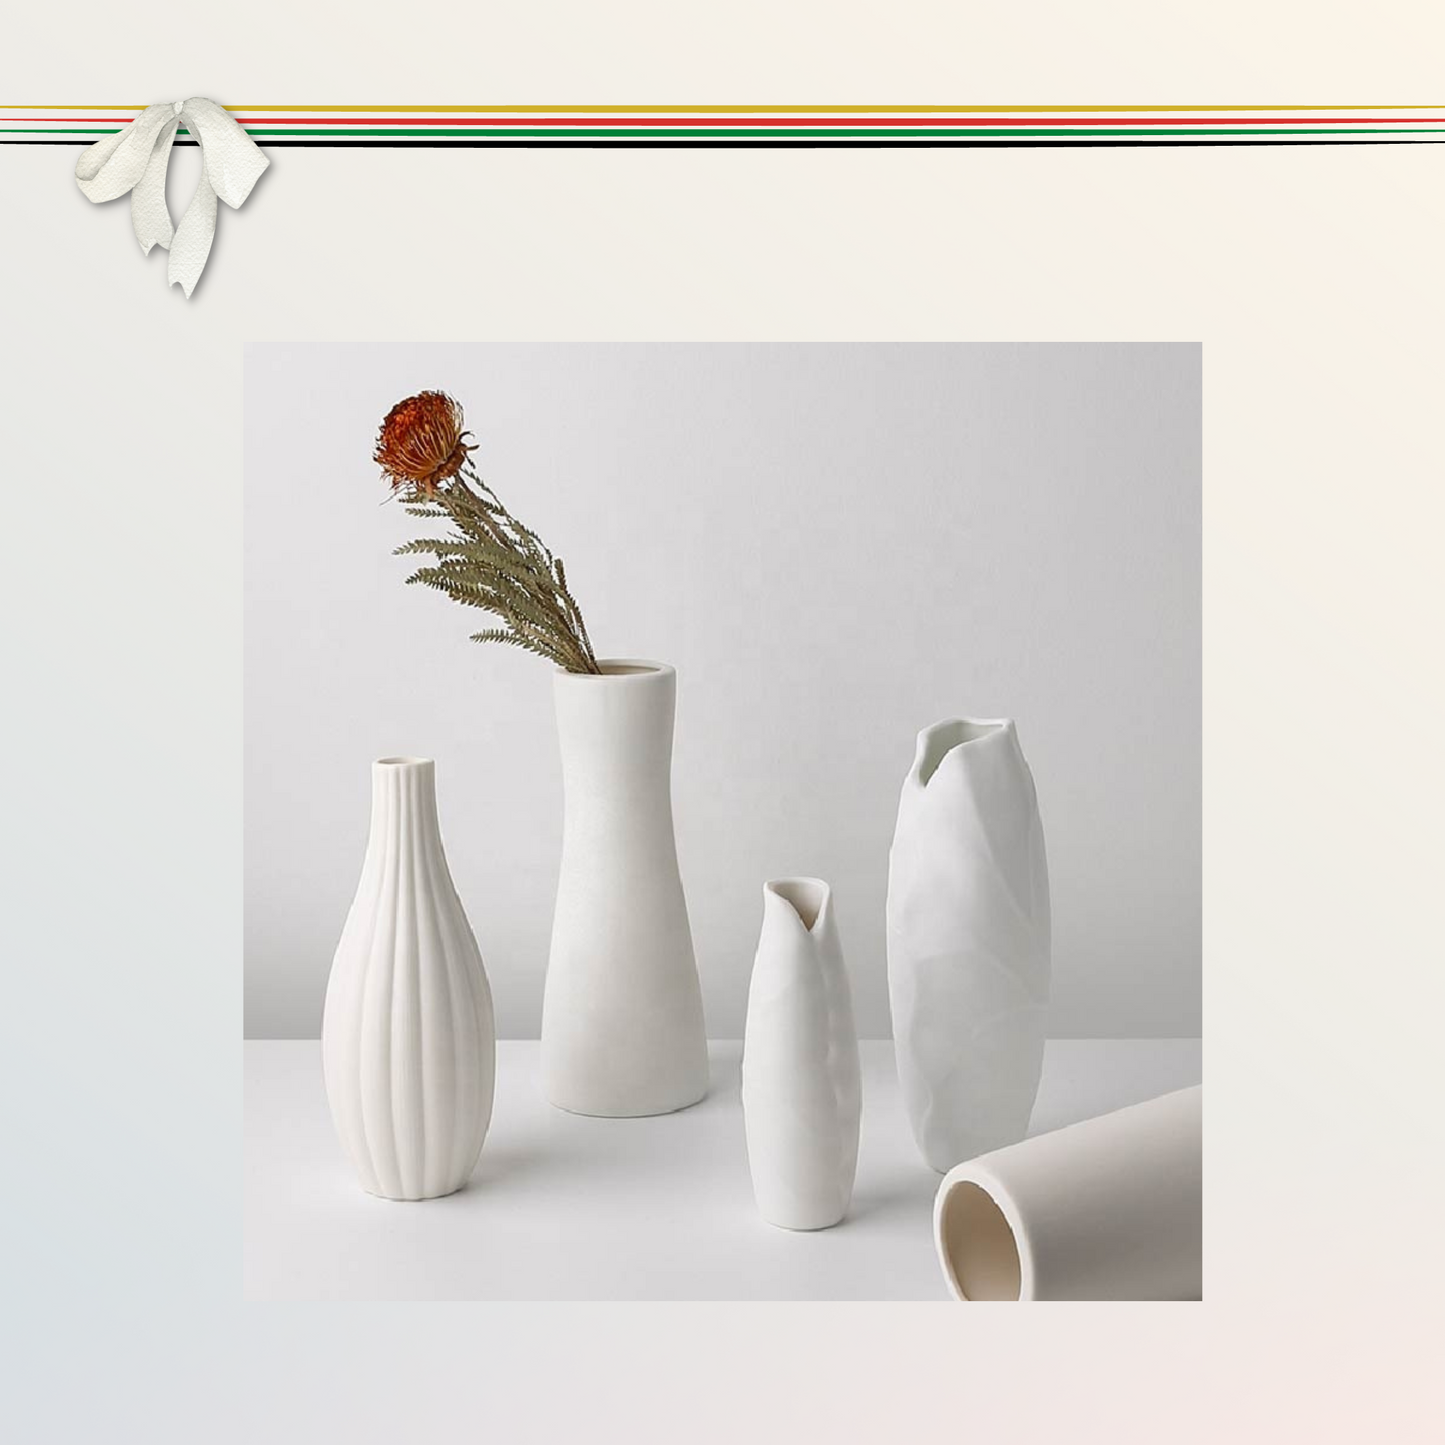 "The Beautiful Lisa Mona Lisa" Home Goods Decorate Modern Design White Nordic Ceramic Flower Vase House Home Decor Vase - Orchid Smart Shop